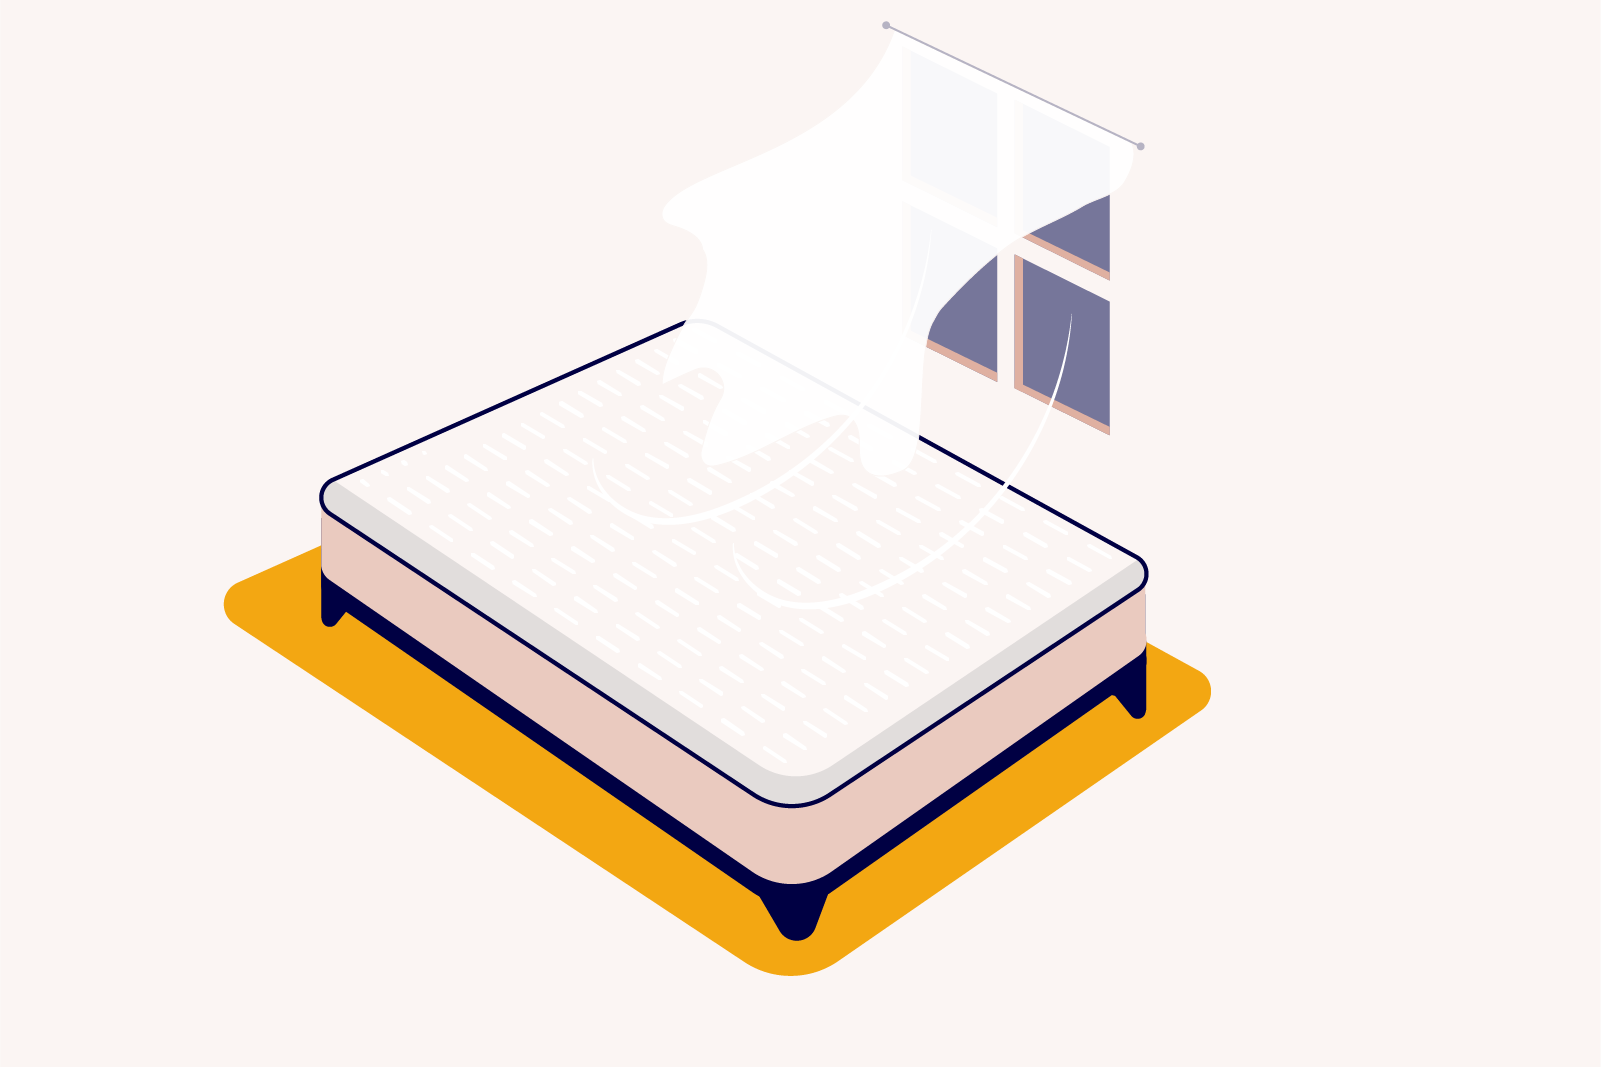 how to clean a mattress: illustration of an open window blowing air onto a mattress